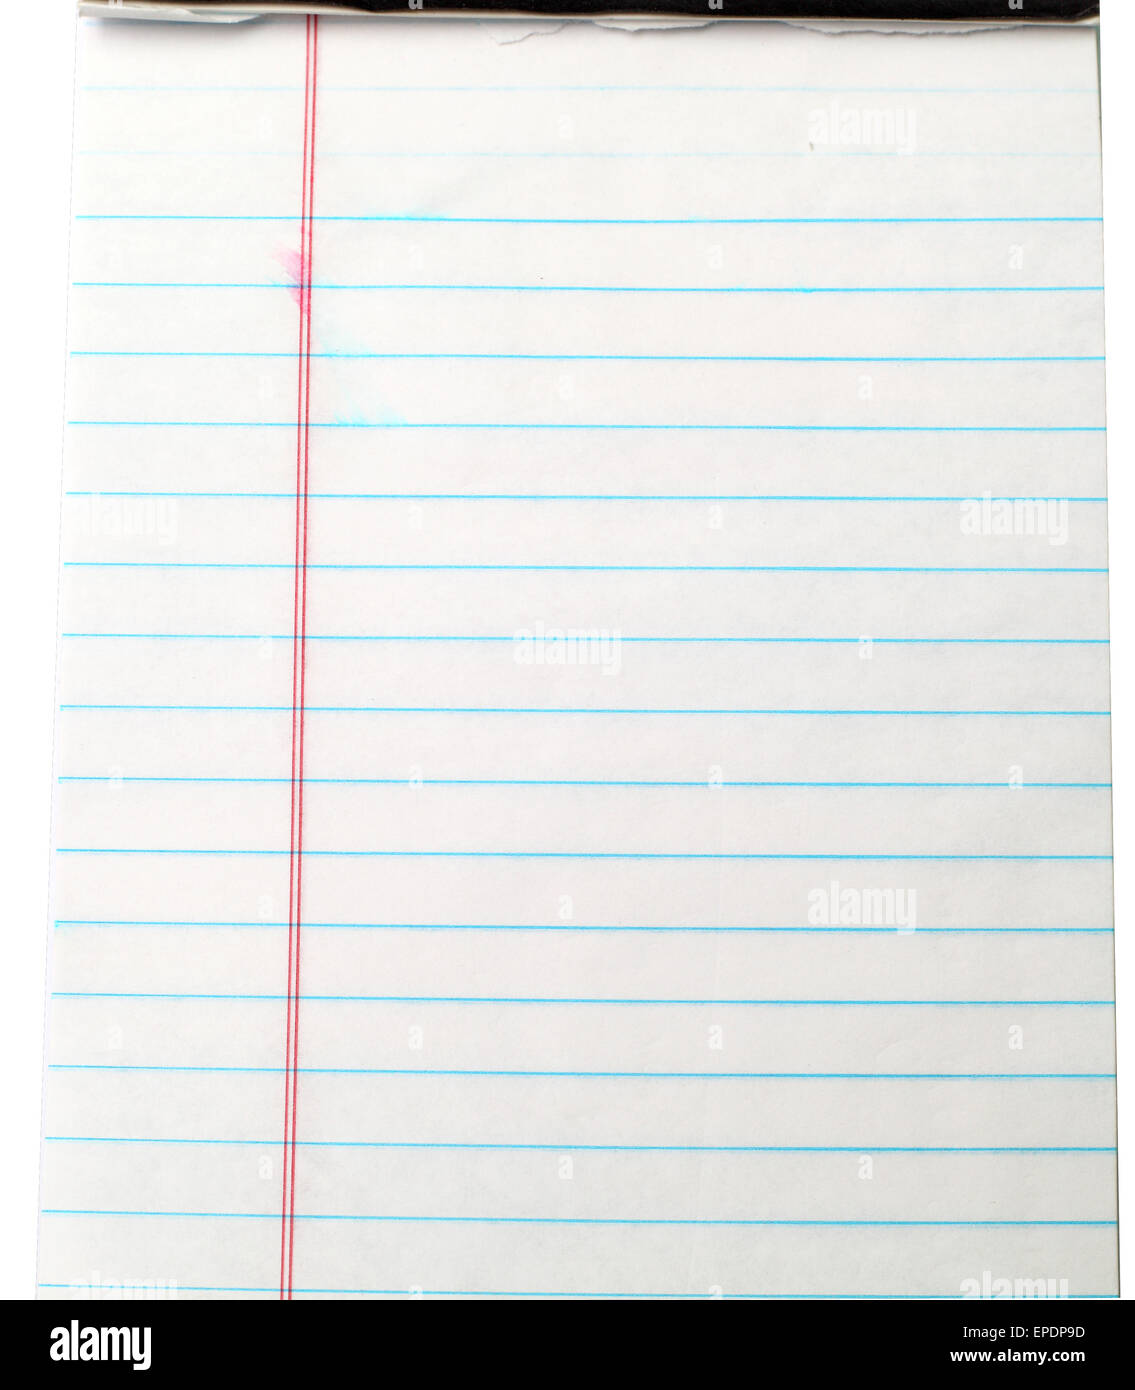 notebook isolated on white background Stock Photo